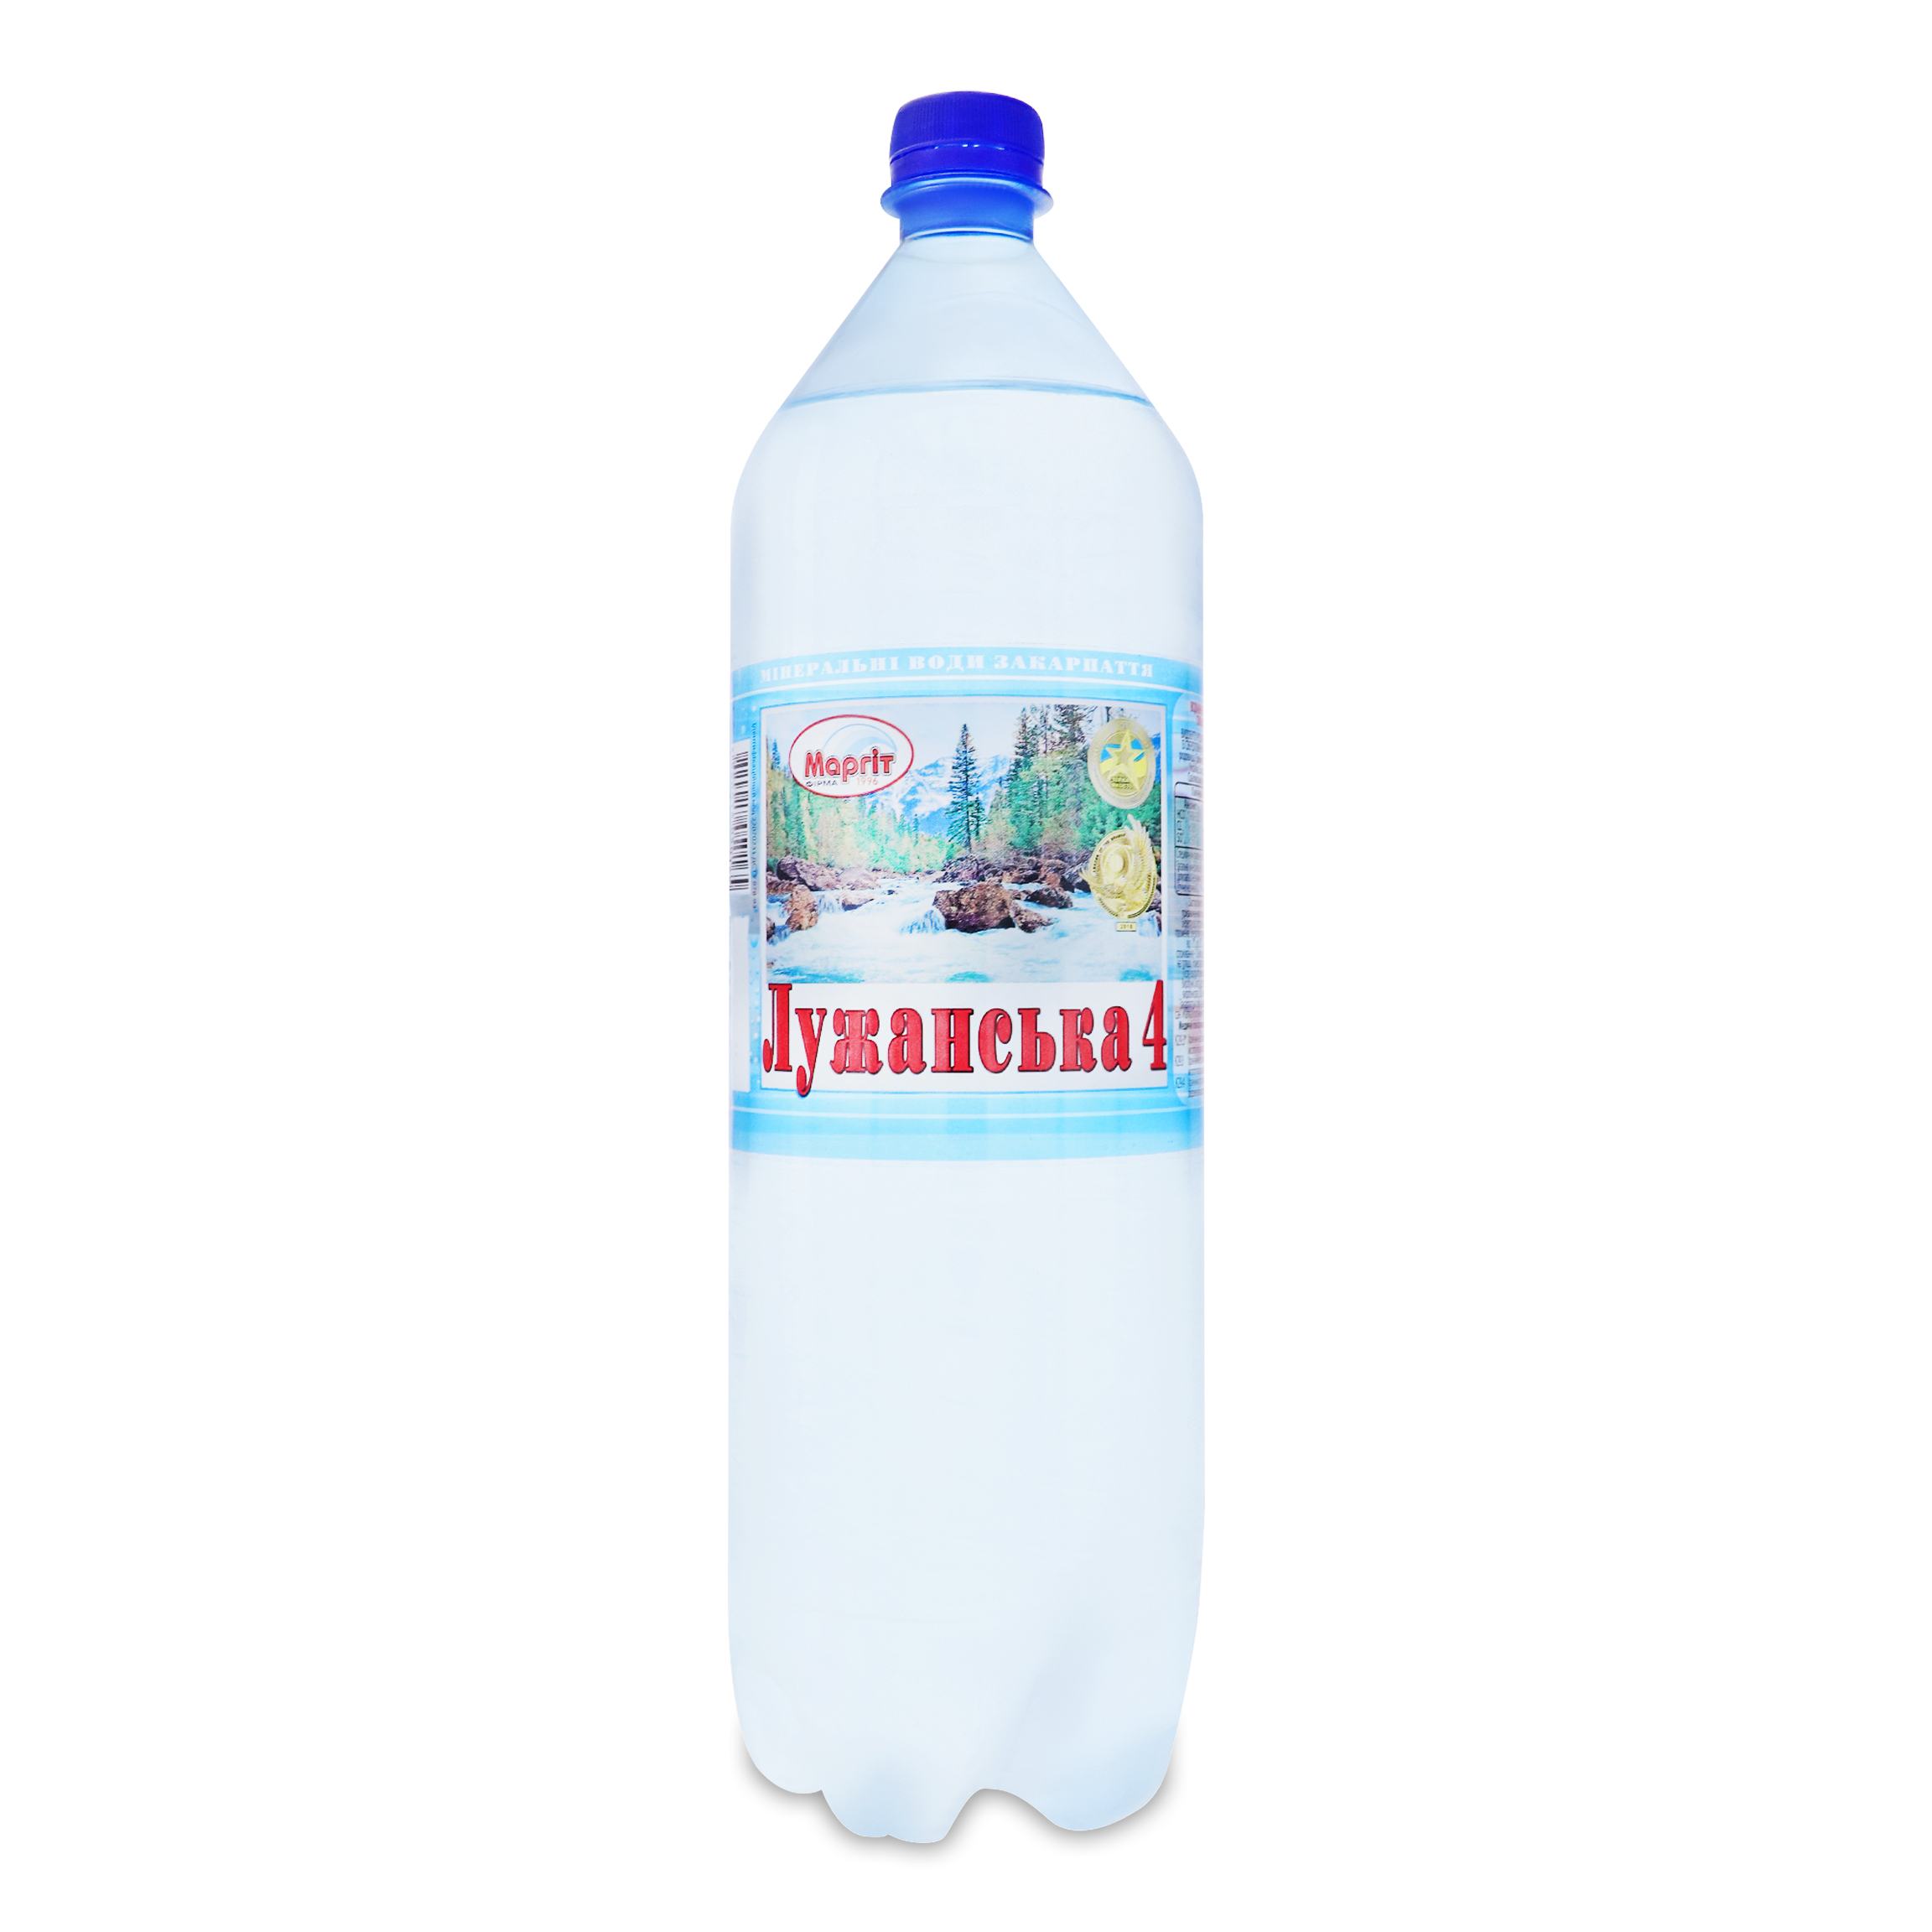 Sparkling natural mineral water Luzhanska 1500ml